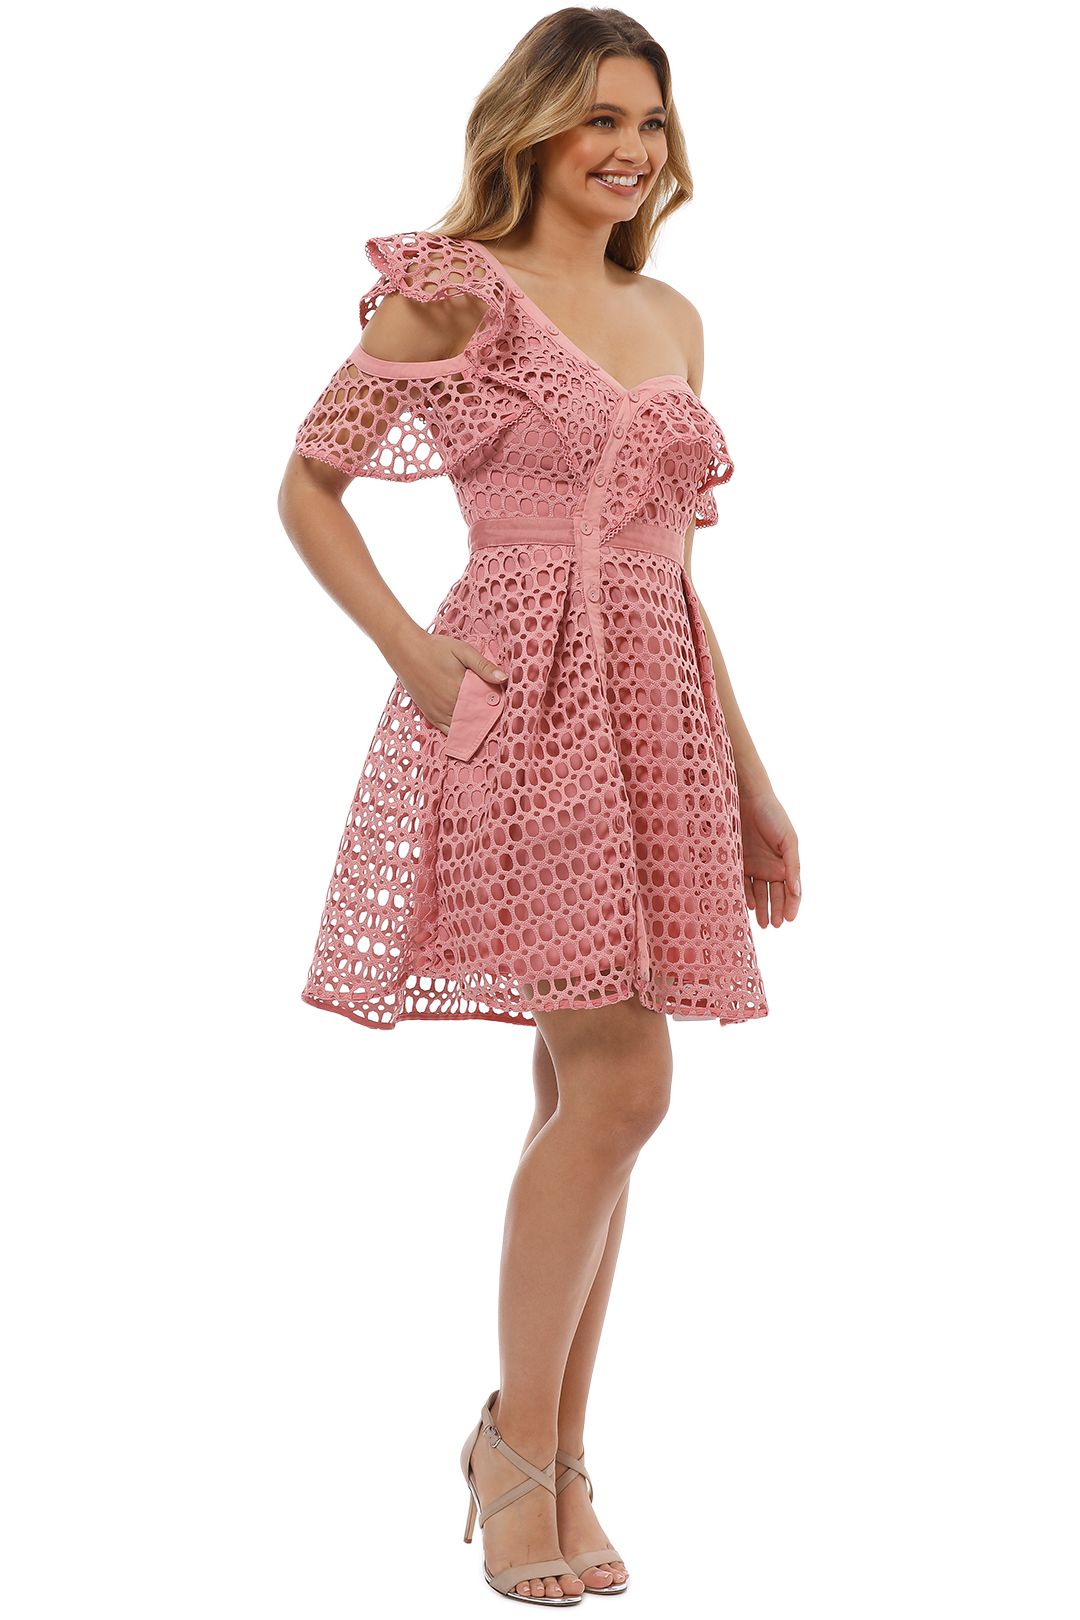 Self Portrait - Lace Frill Mini Dress - Pink - Side 